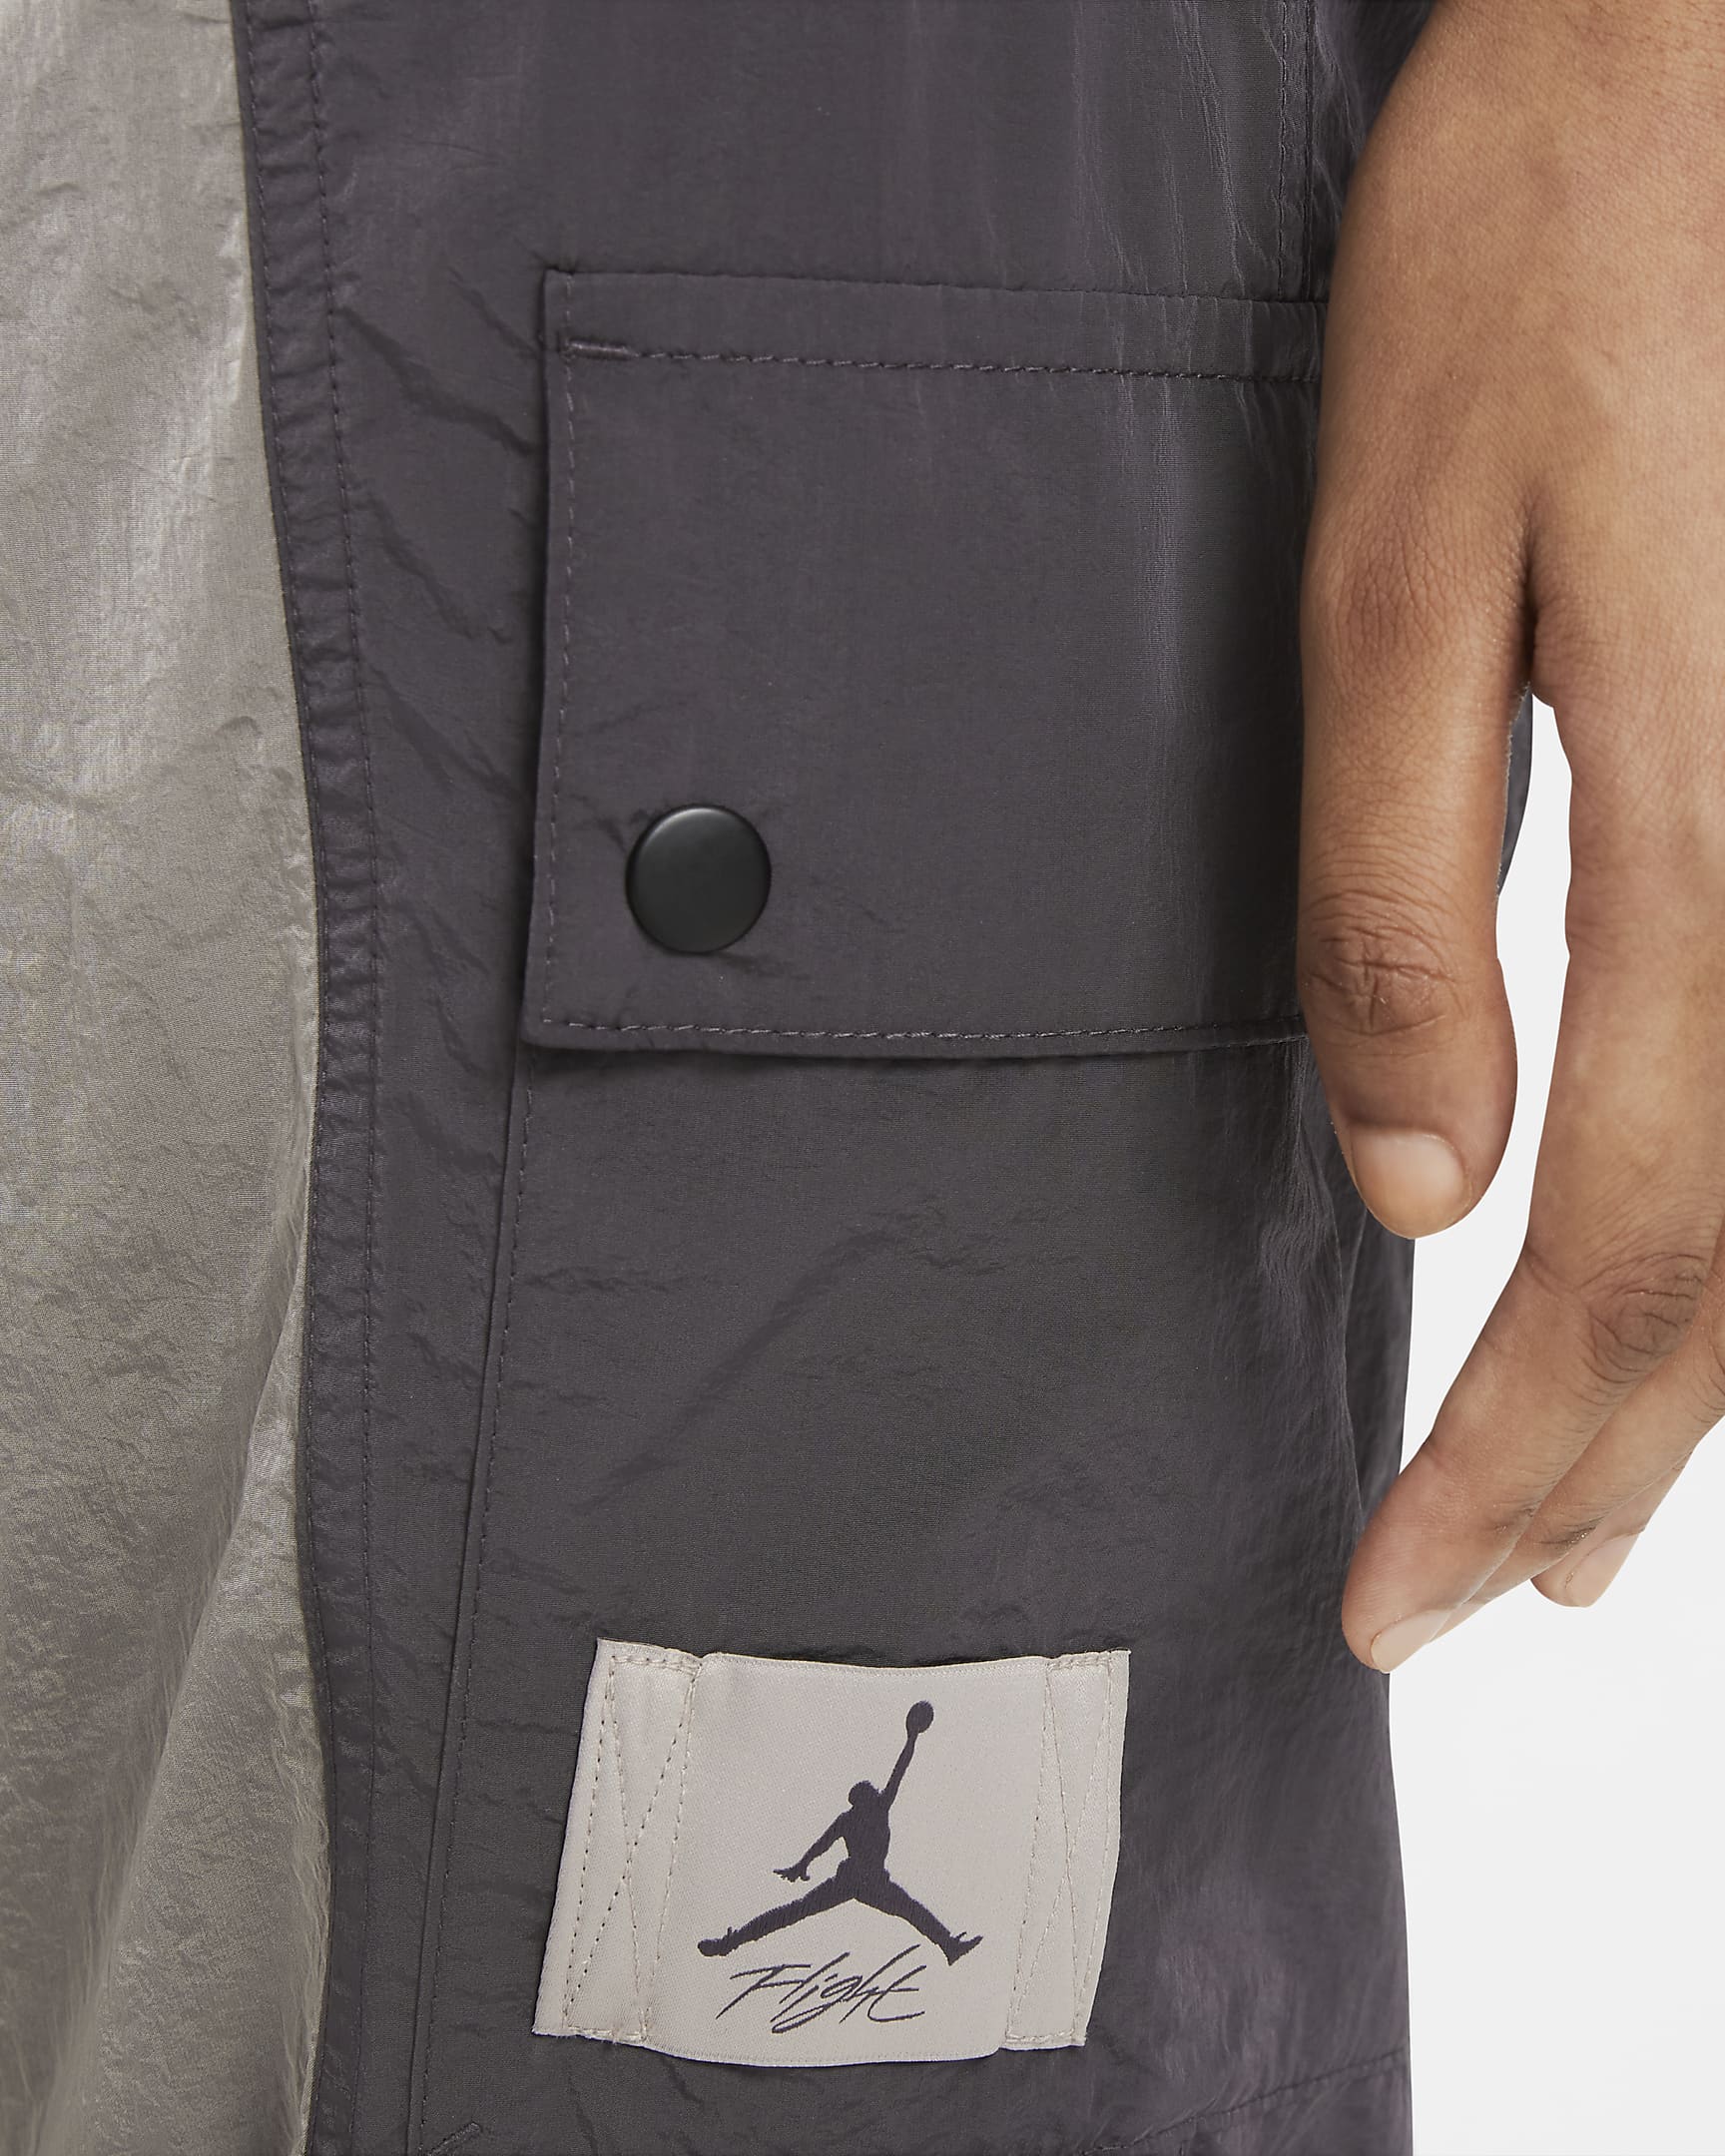 jordan-essentials-womens-woven-pants-4Hm7TT-1.png